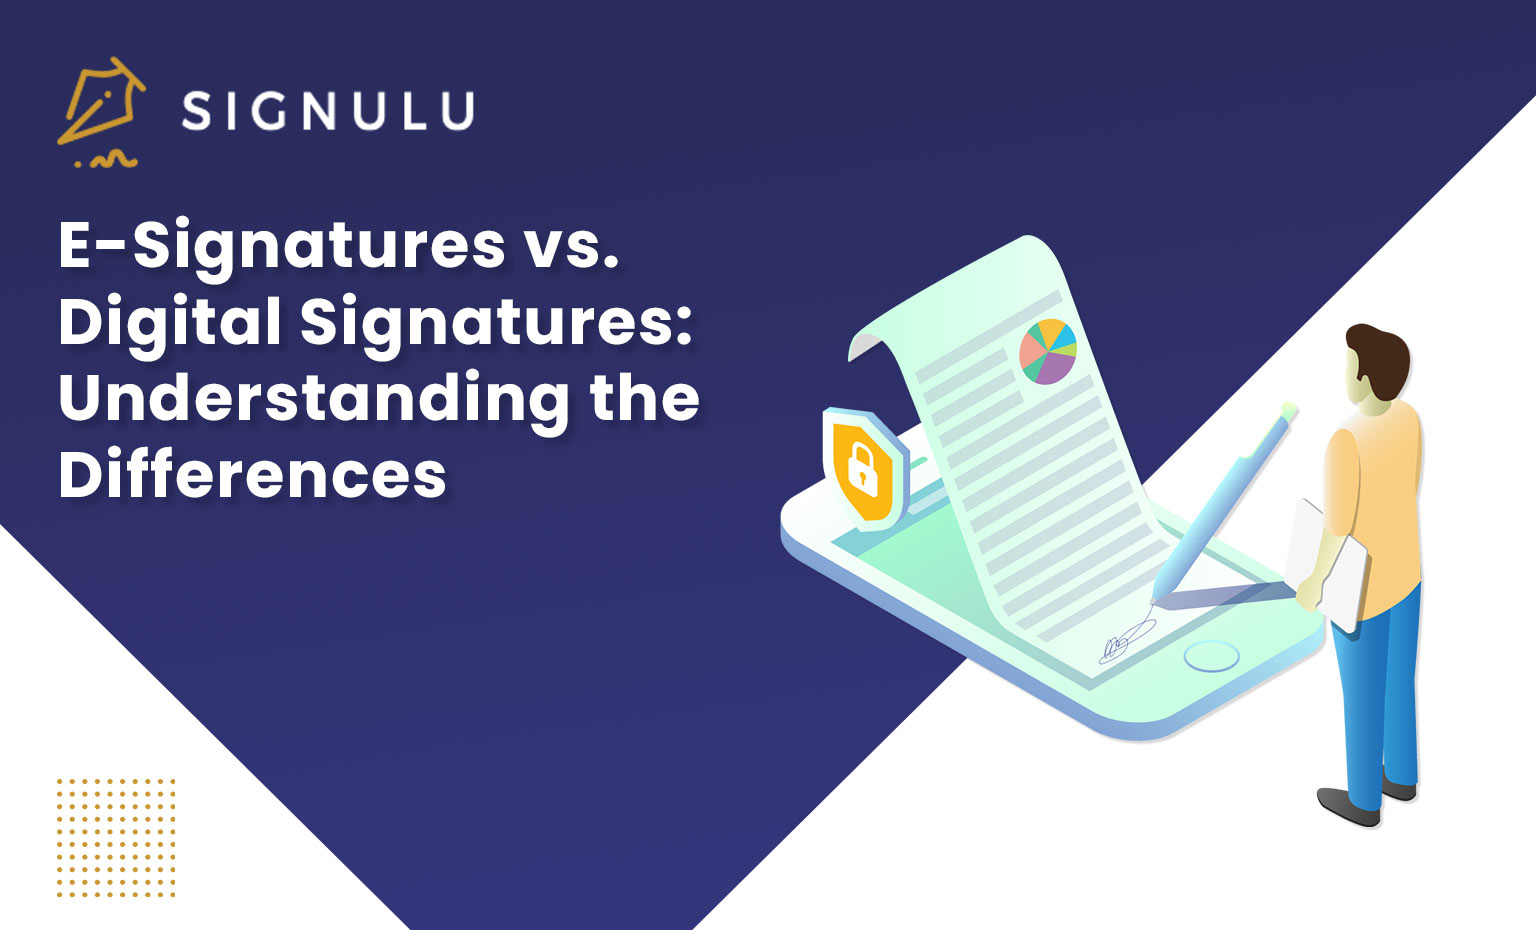 E-Signatures vs. Digital Signatures: Understanding the Differences